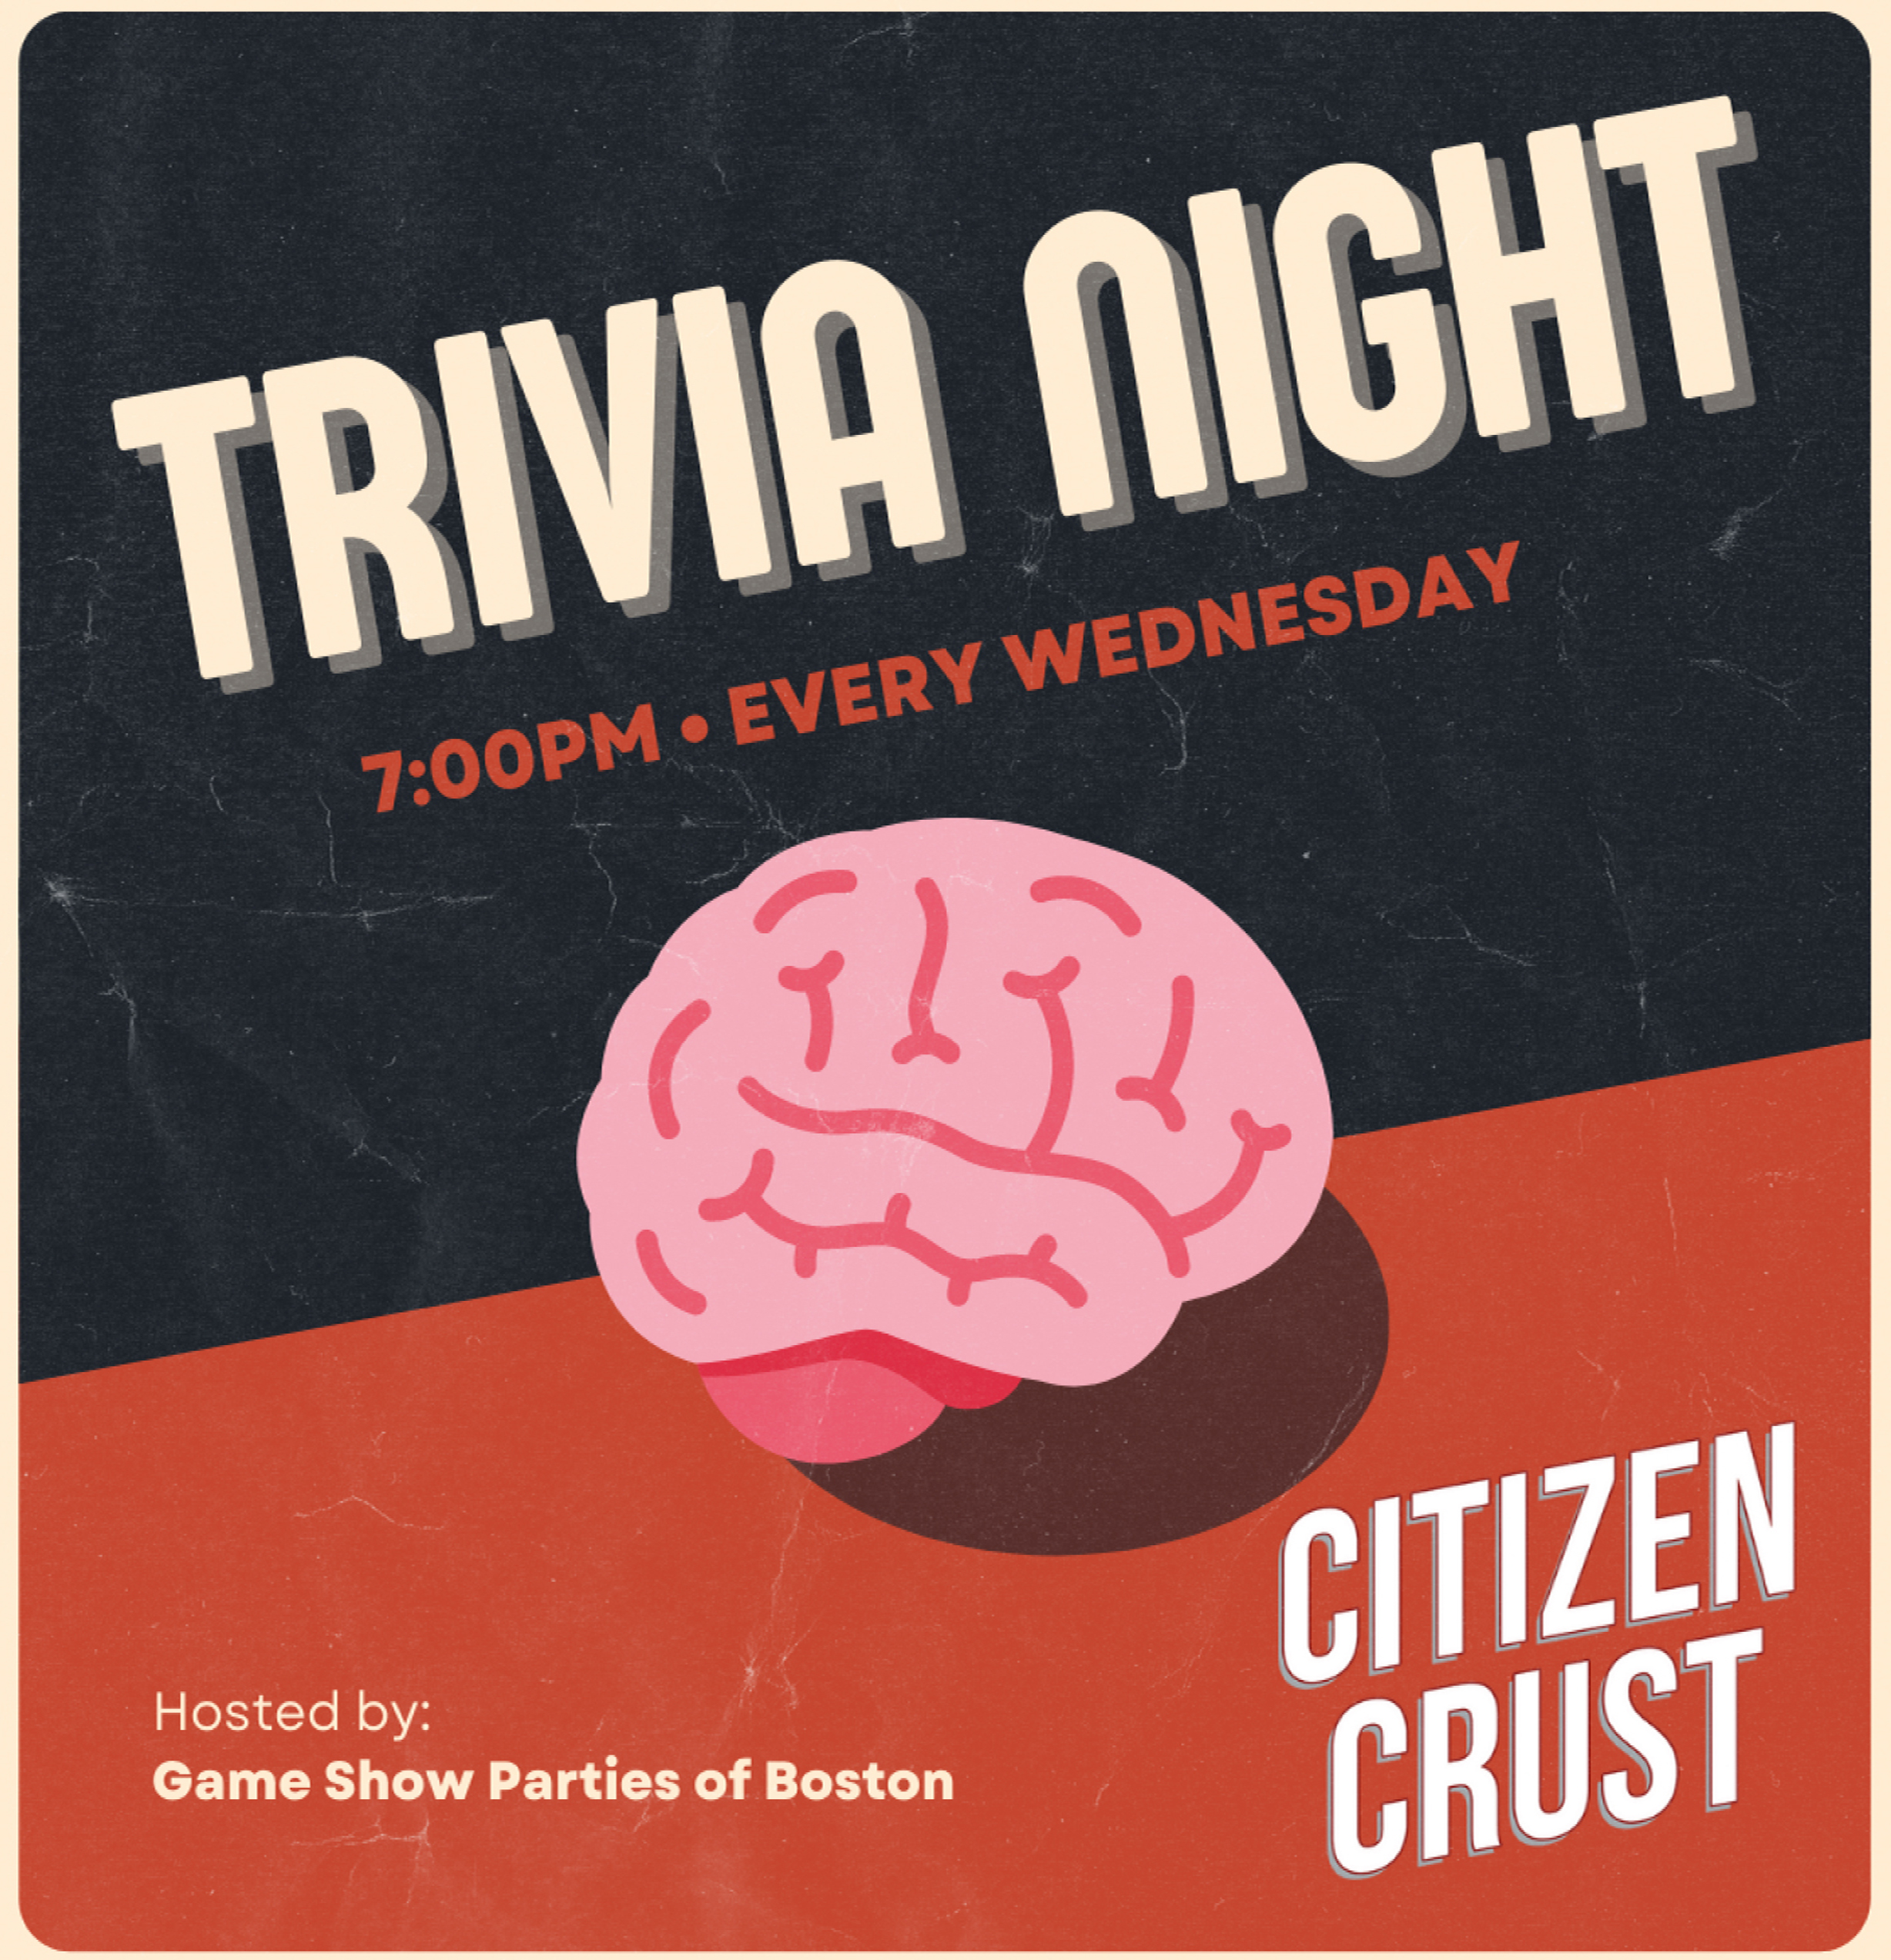 Citizen Crust Trivia Night Wednesday